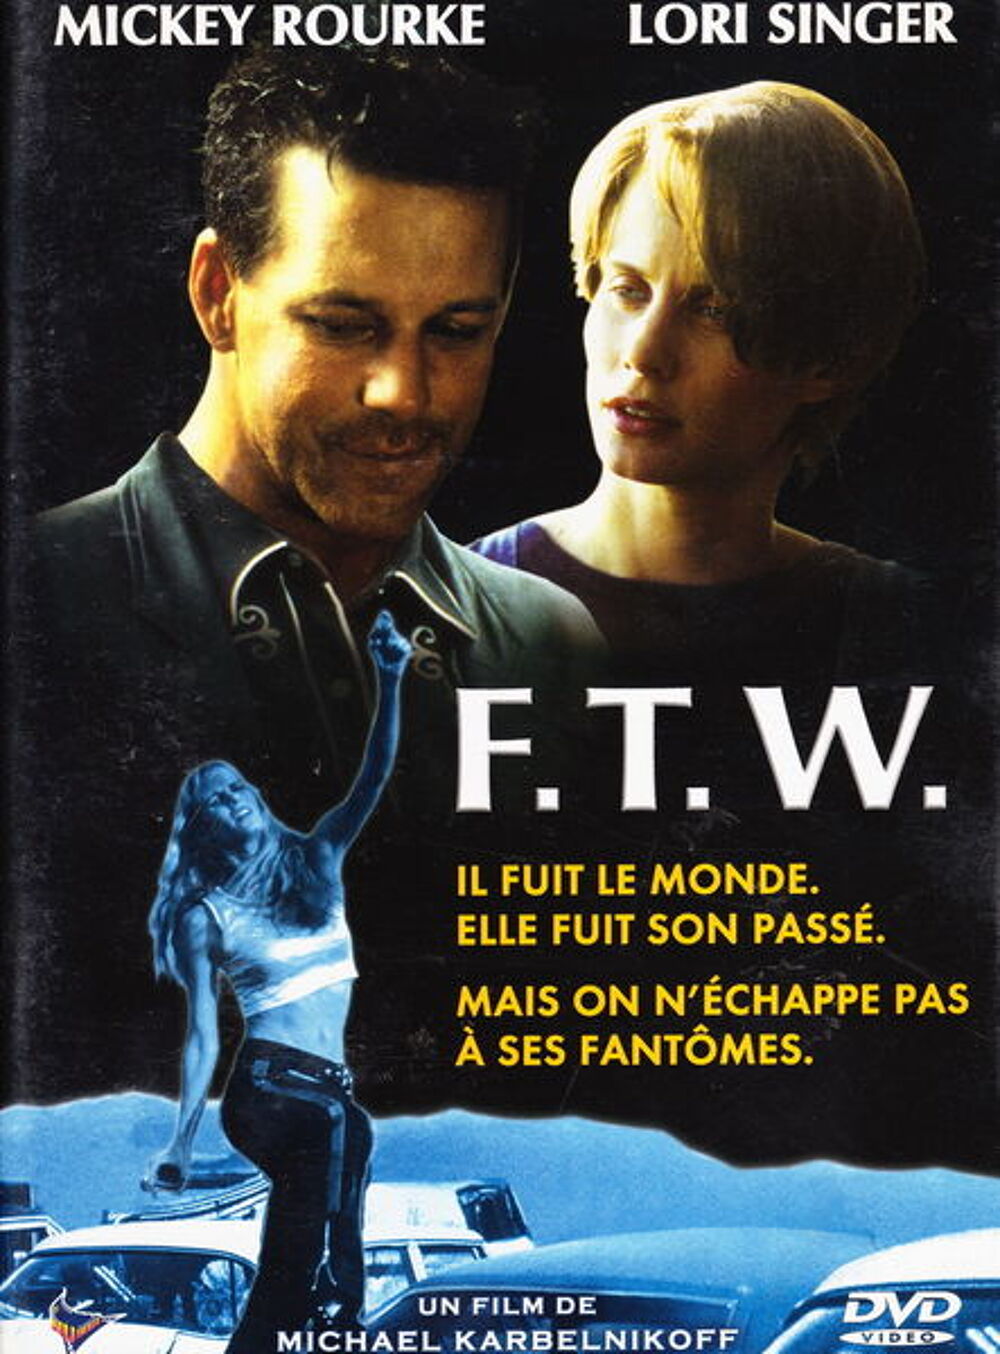 DVD F.T.W.
DVD et blu-ray